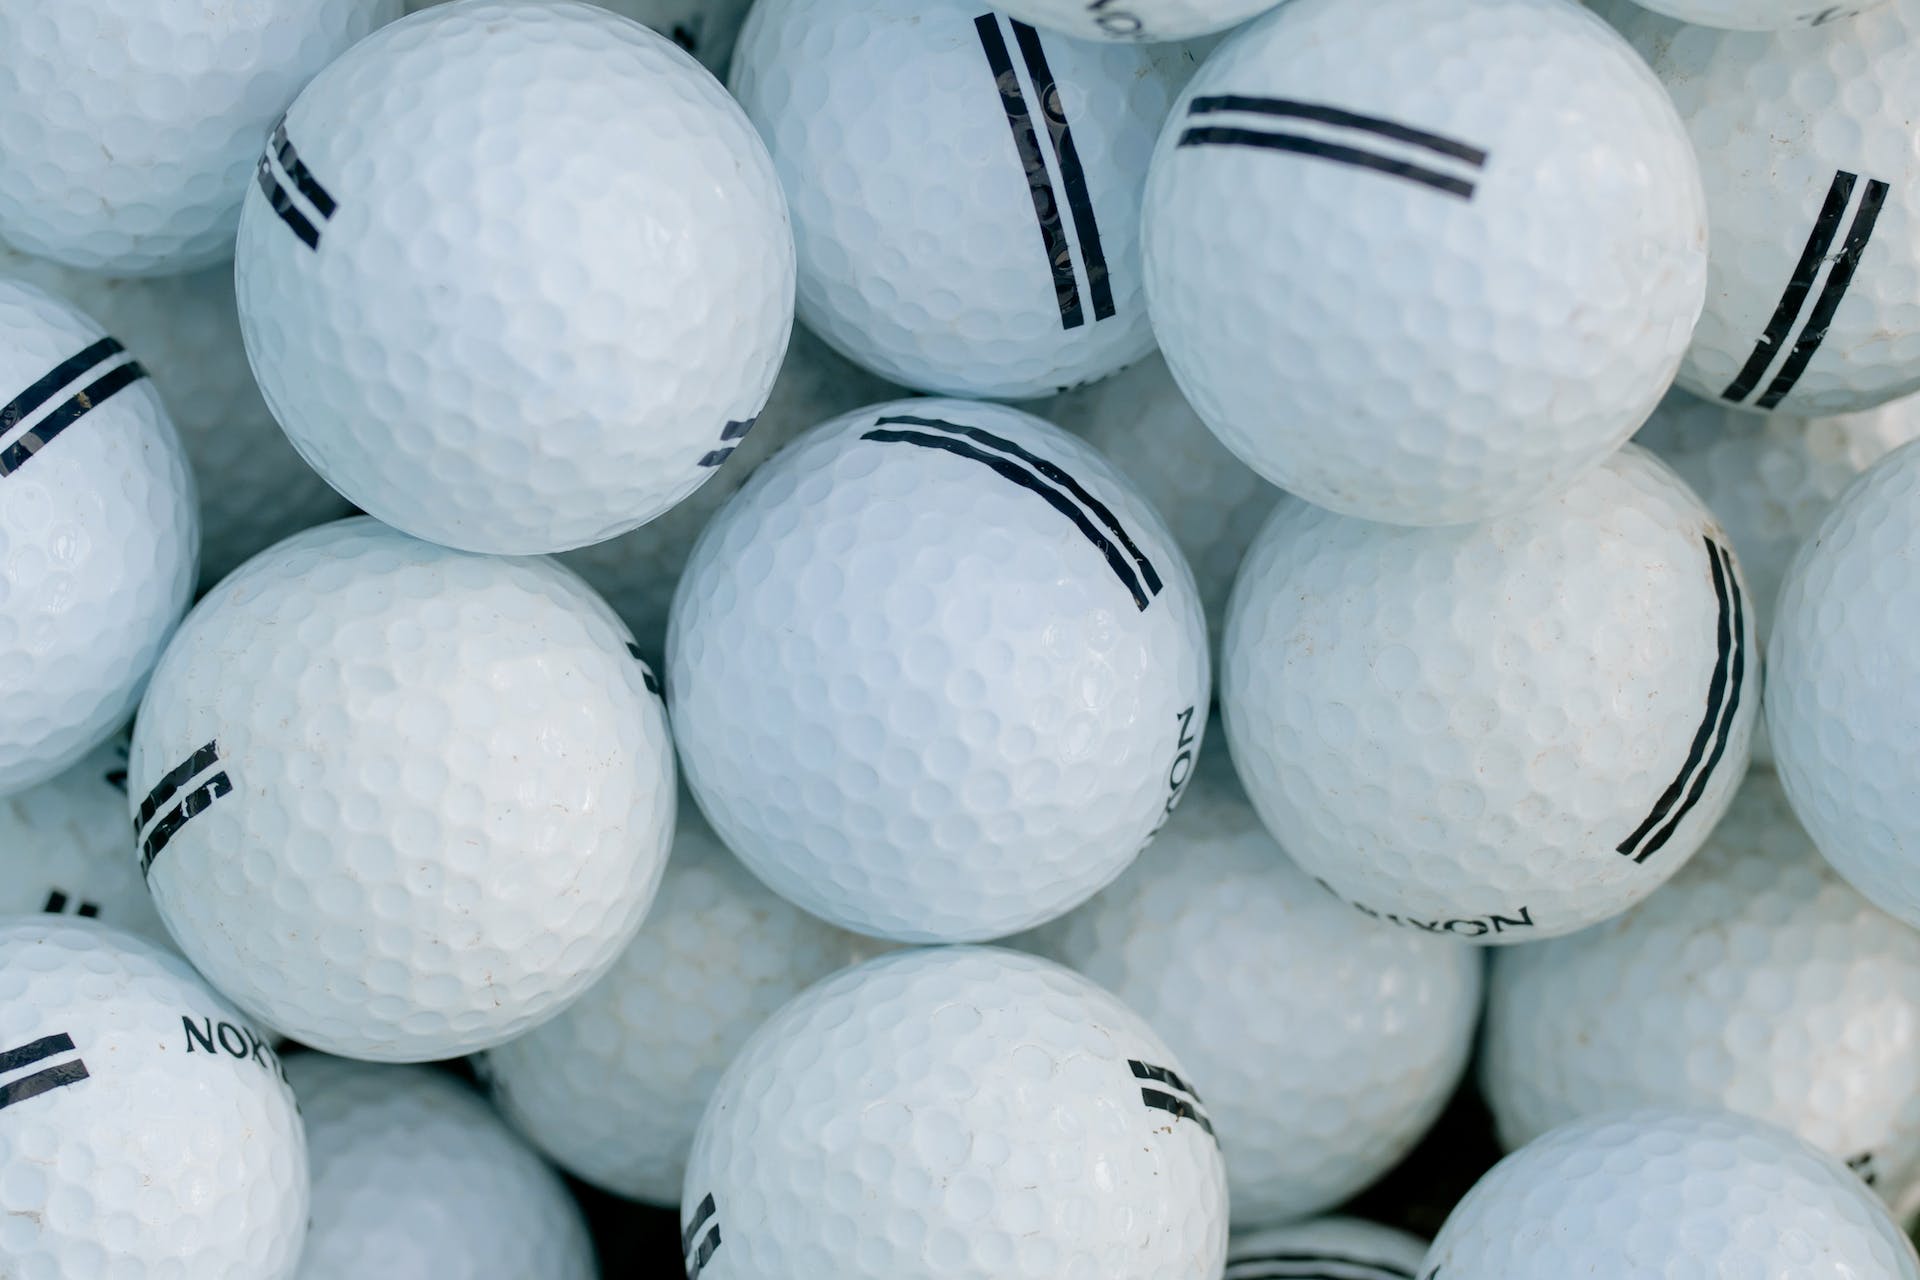 Pelotas de golf | Fuente: Pexels